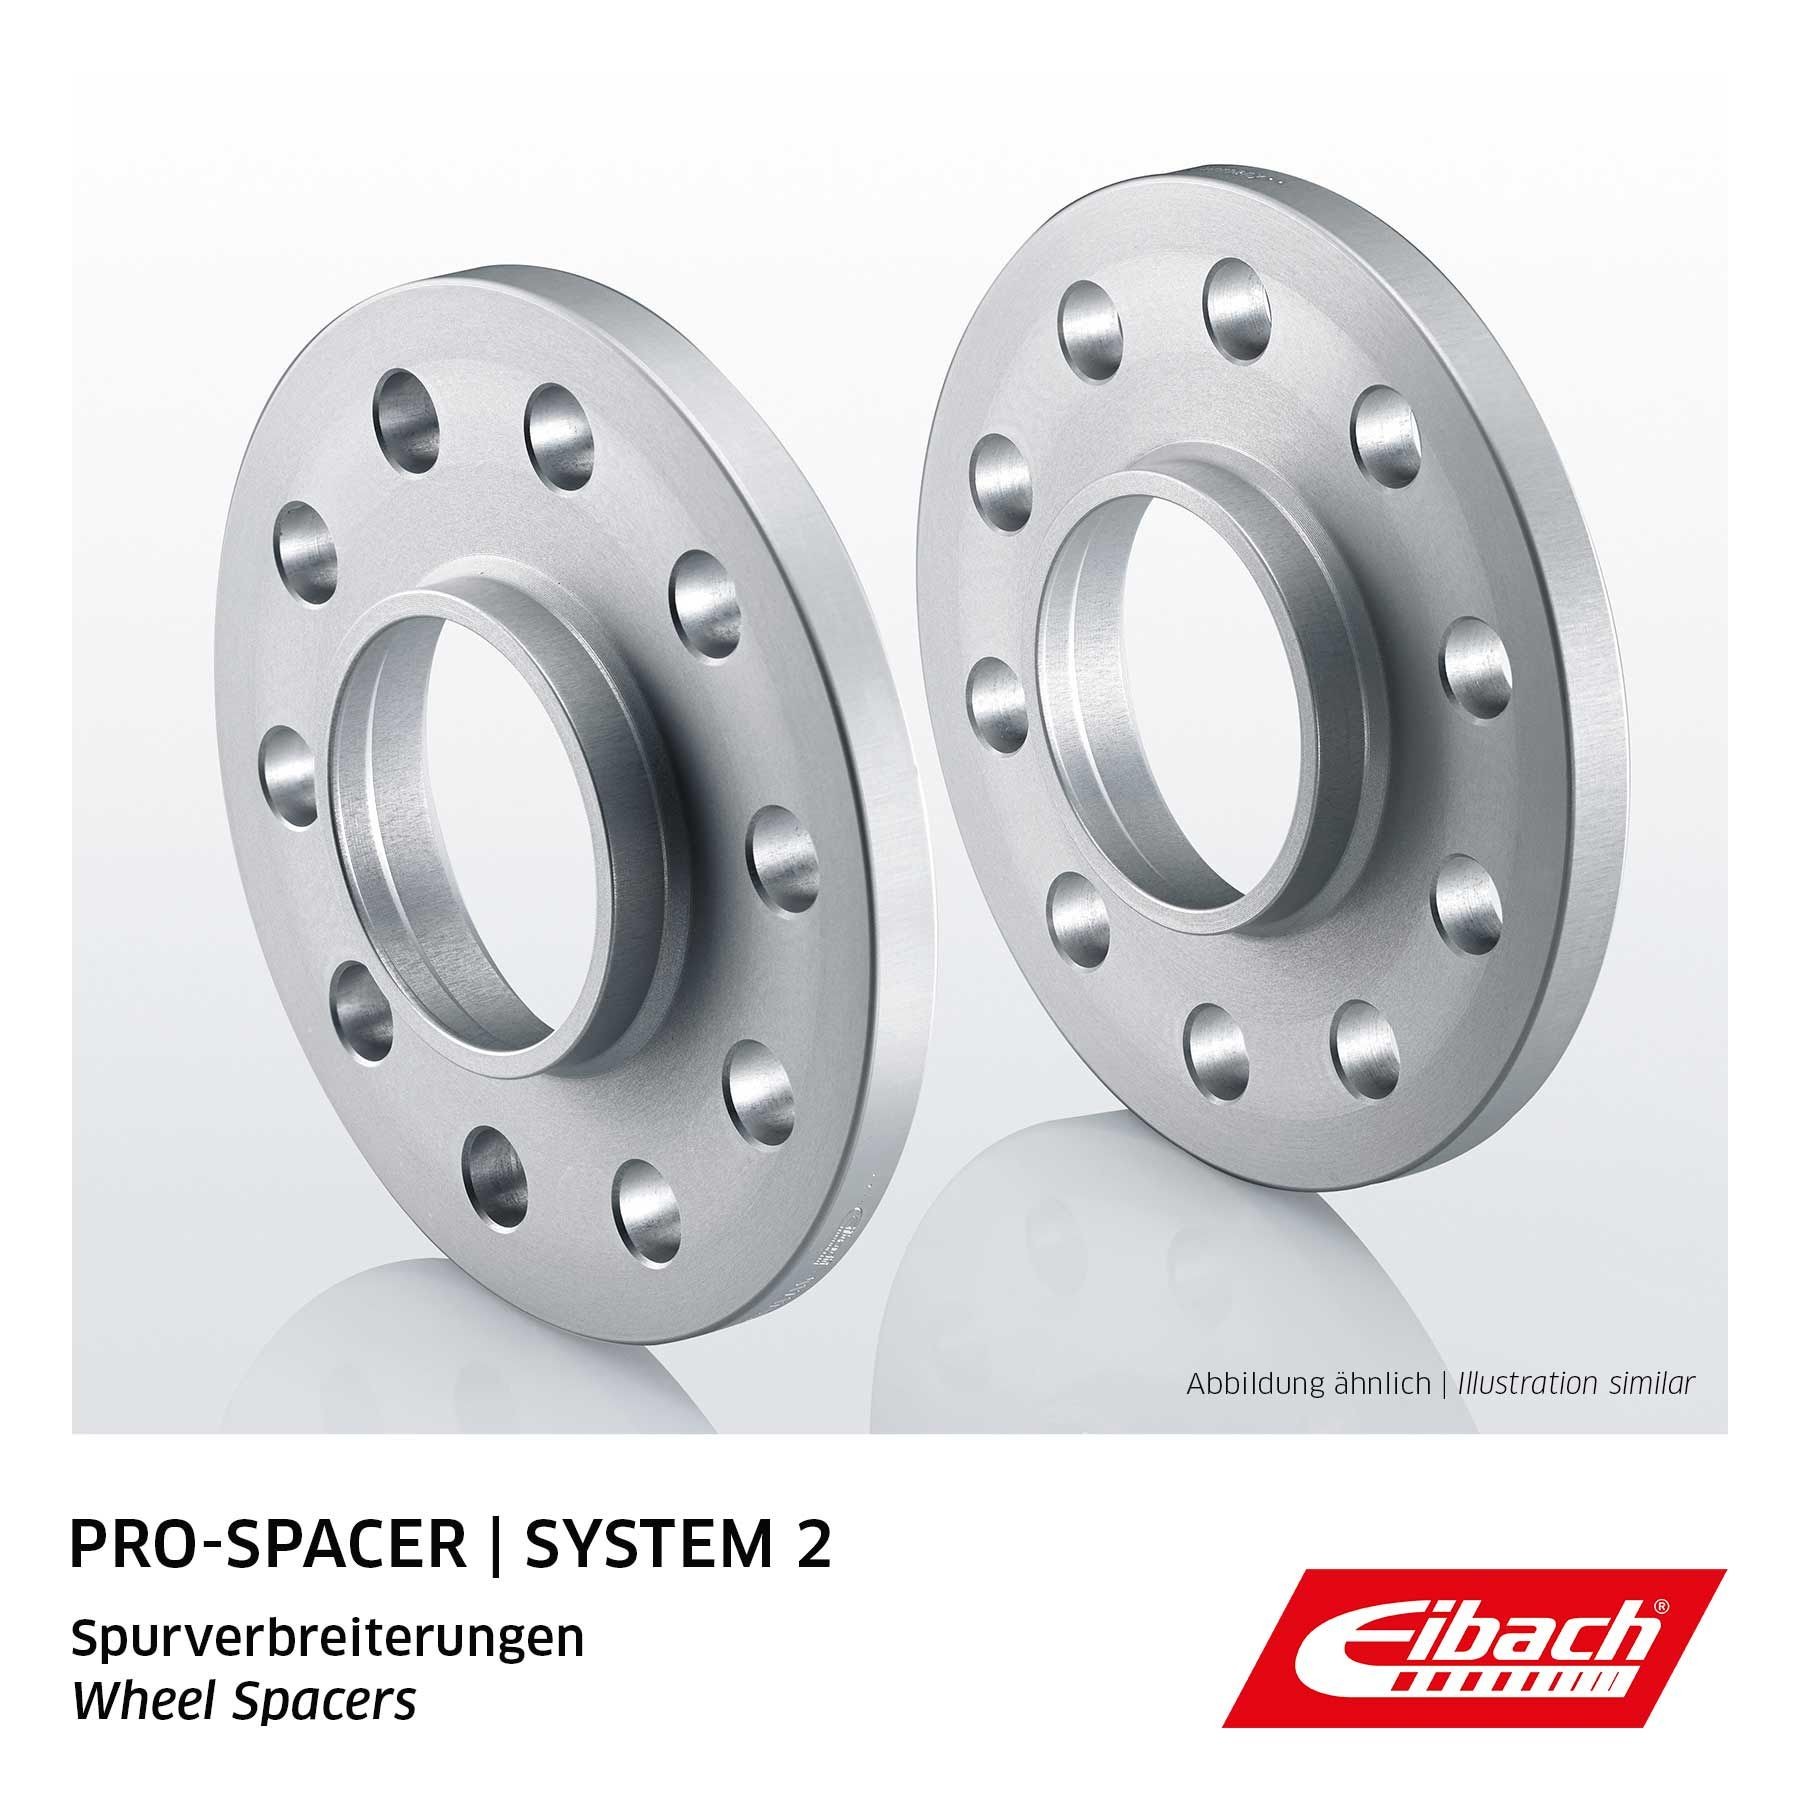 OEM-quality EIBACH S90-2-10-004 Hub centric wheel spacers